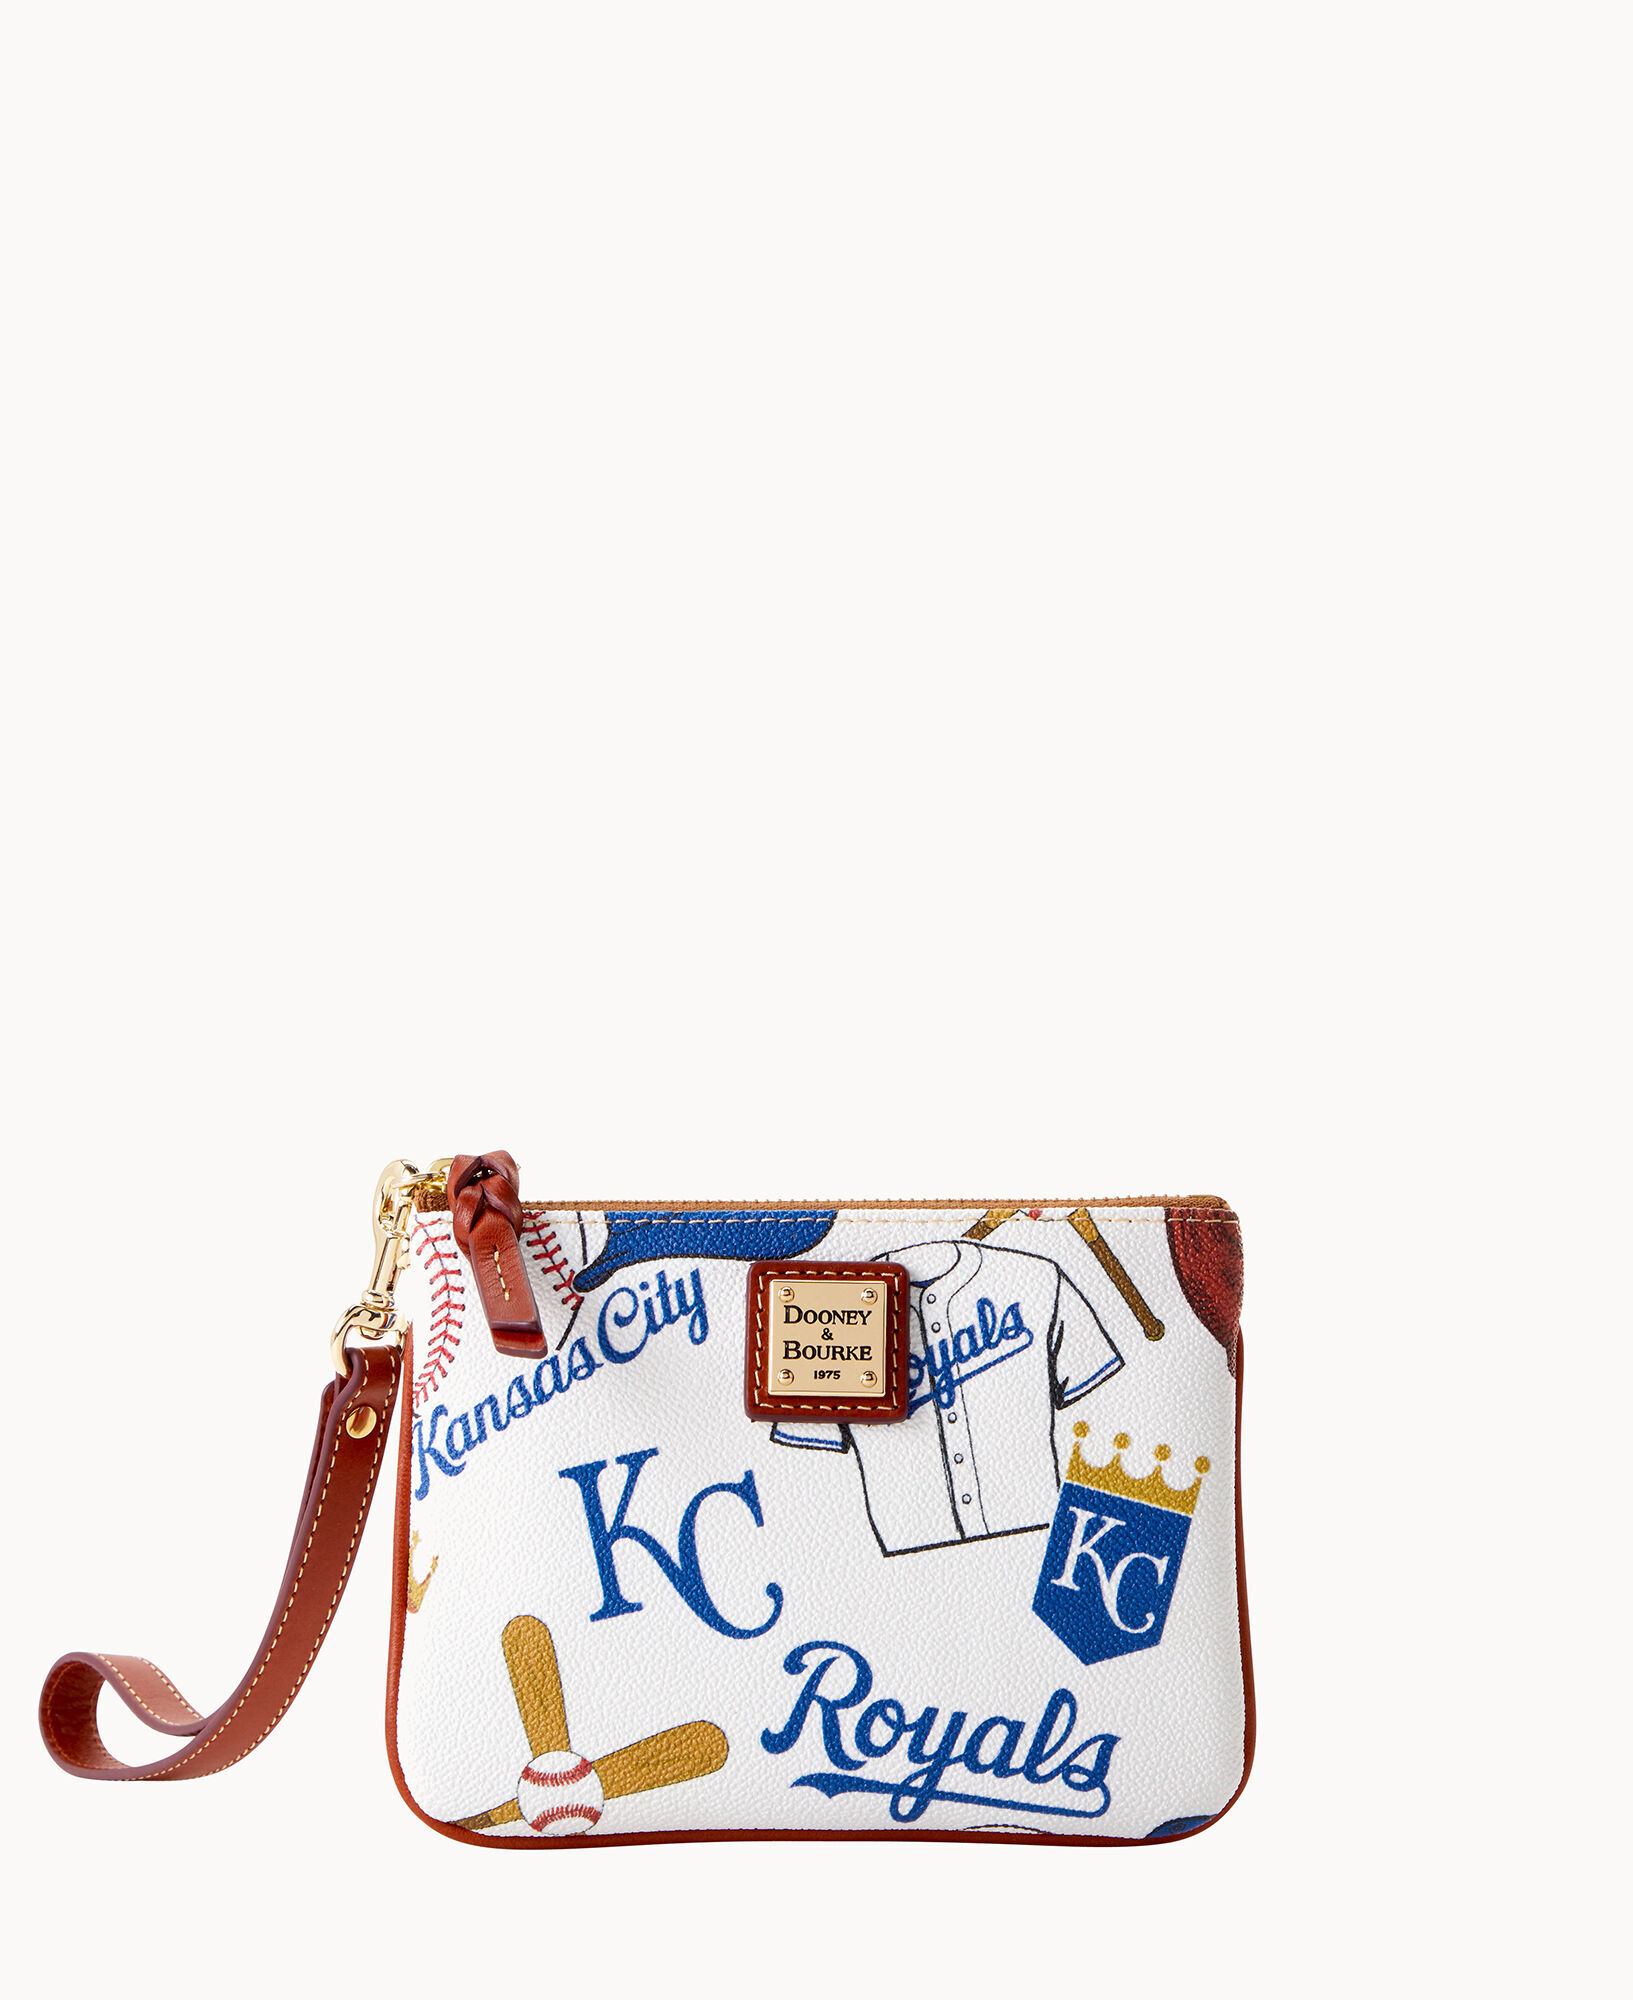 Dooney & Bourke Kansas City Royals MLB Fan Shop